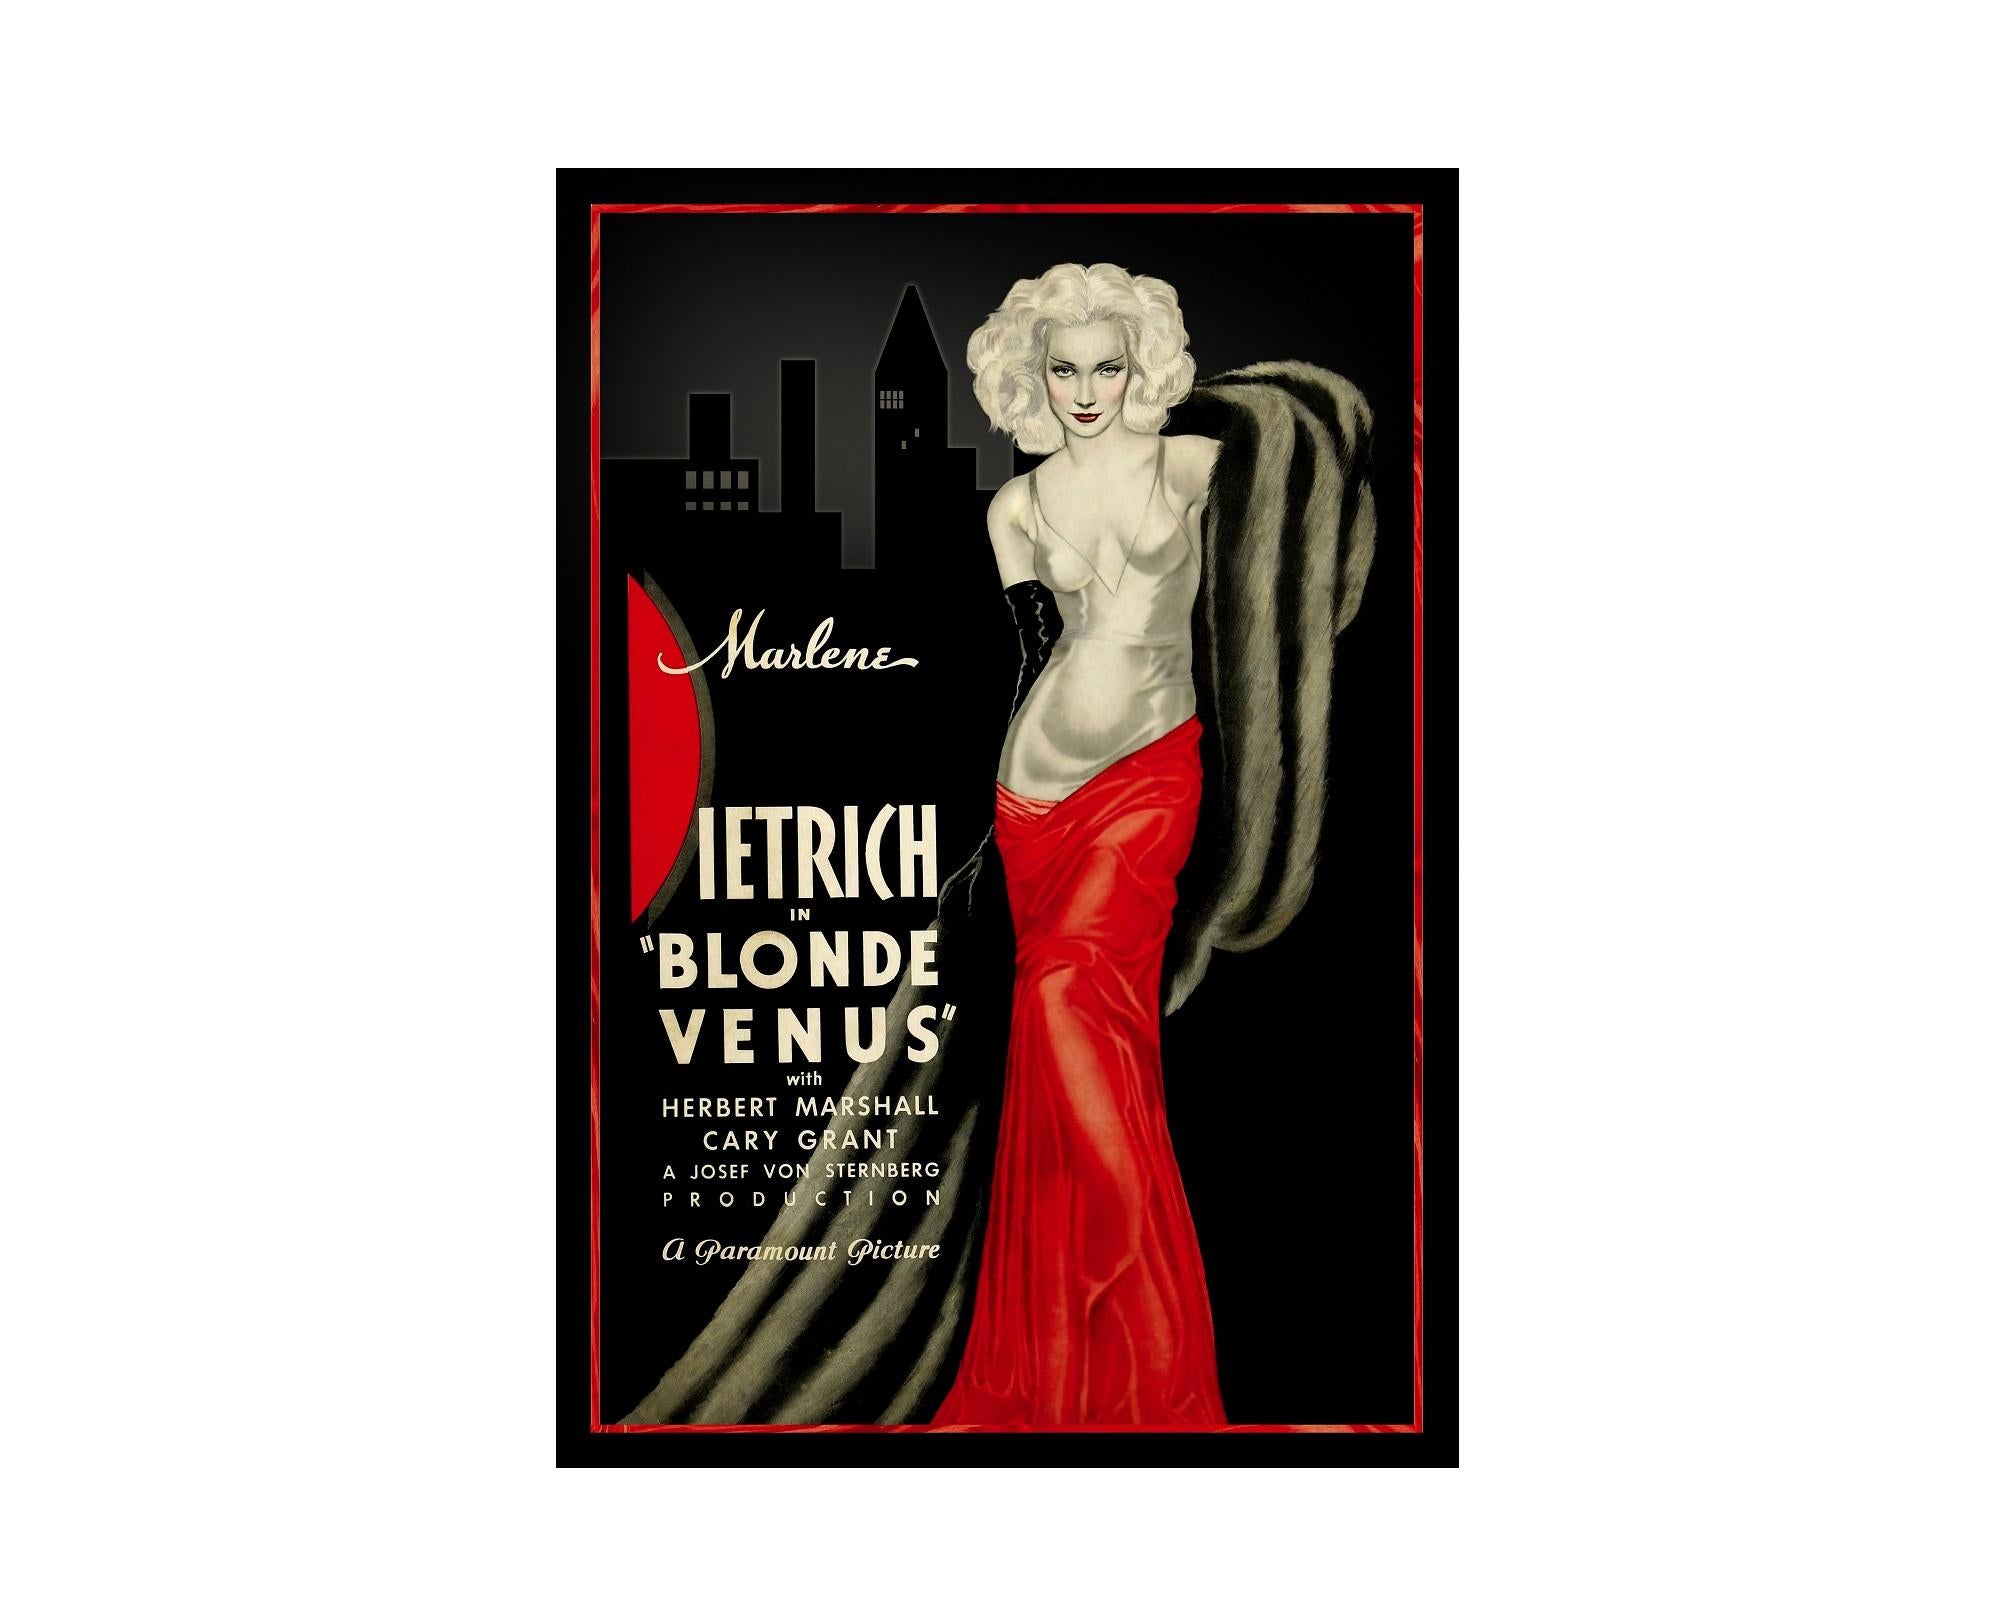 American Blonde Venus, after Vintage Movie Poster, Hollywood Regency For Sale